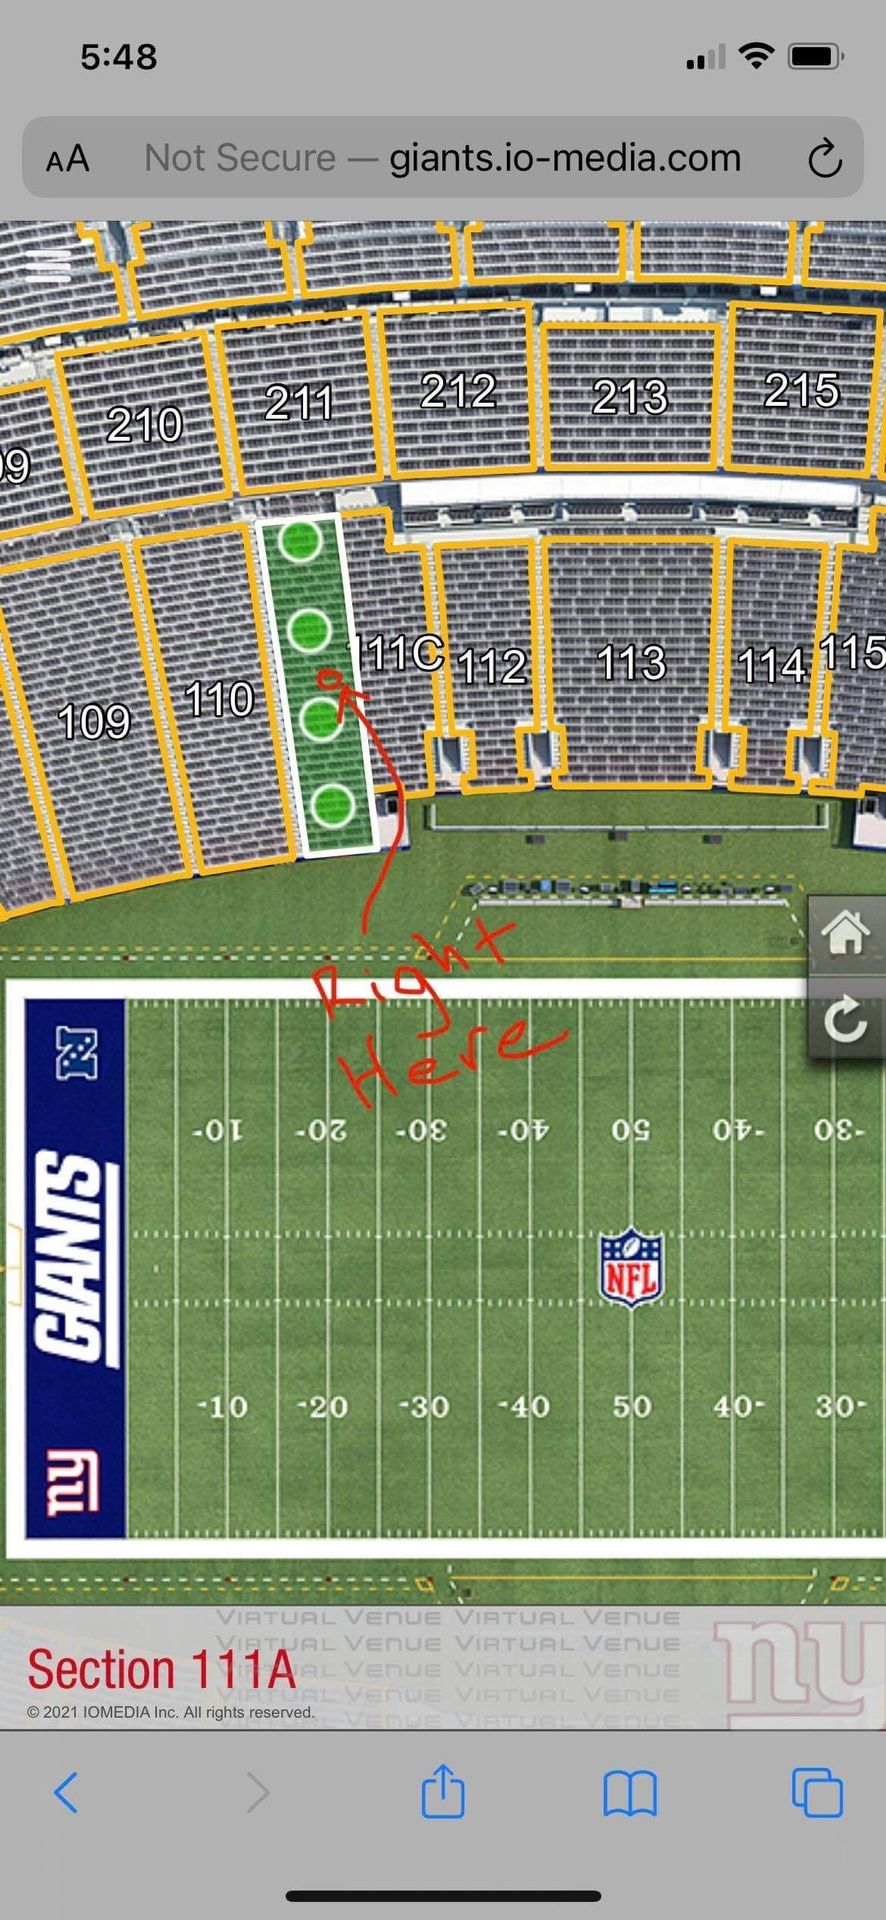 NY Giants vs Carolina Panthers “2” Incredible Seats with Parking Pass